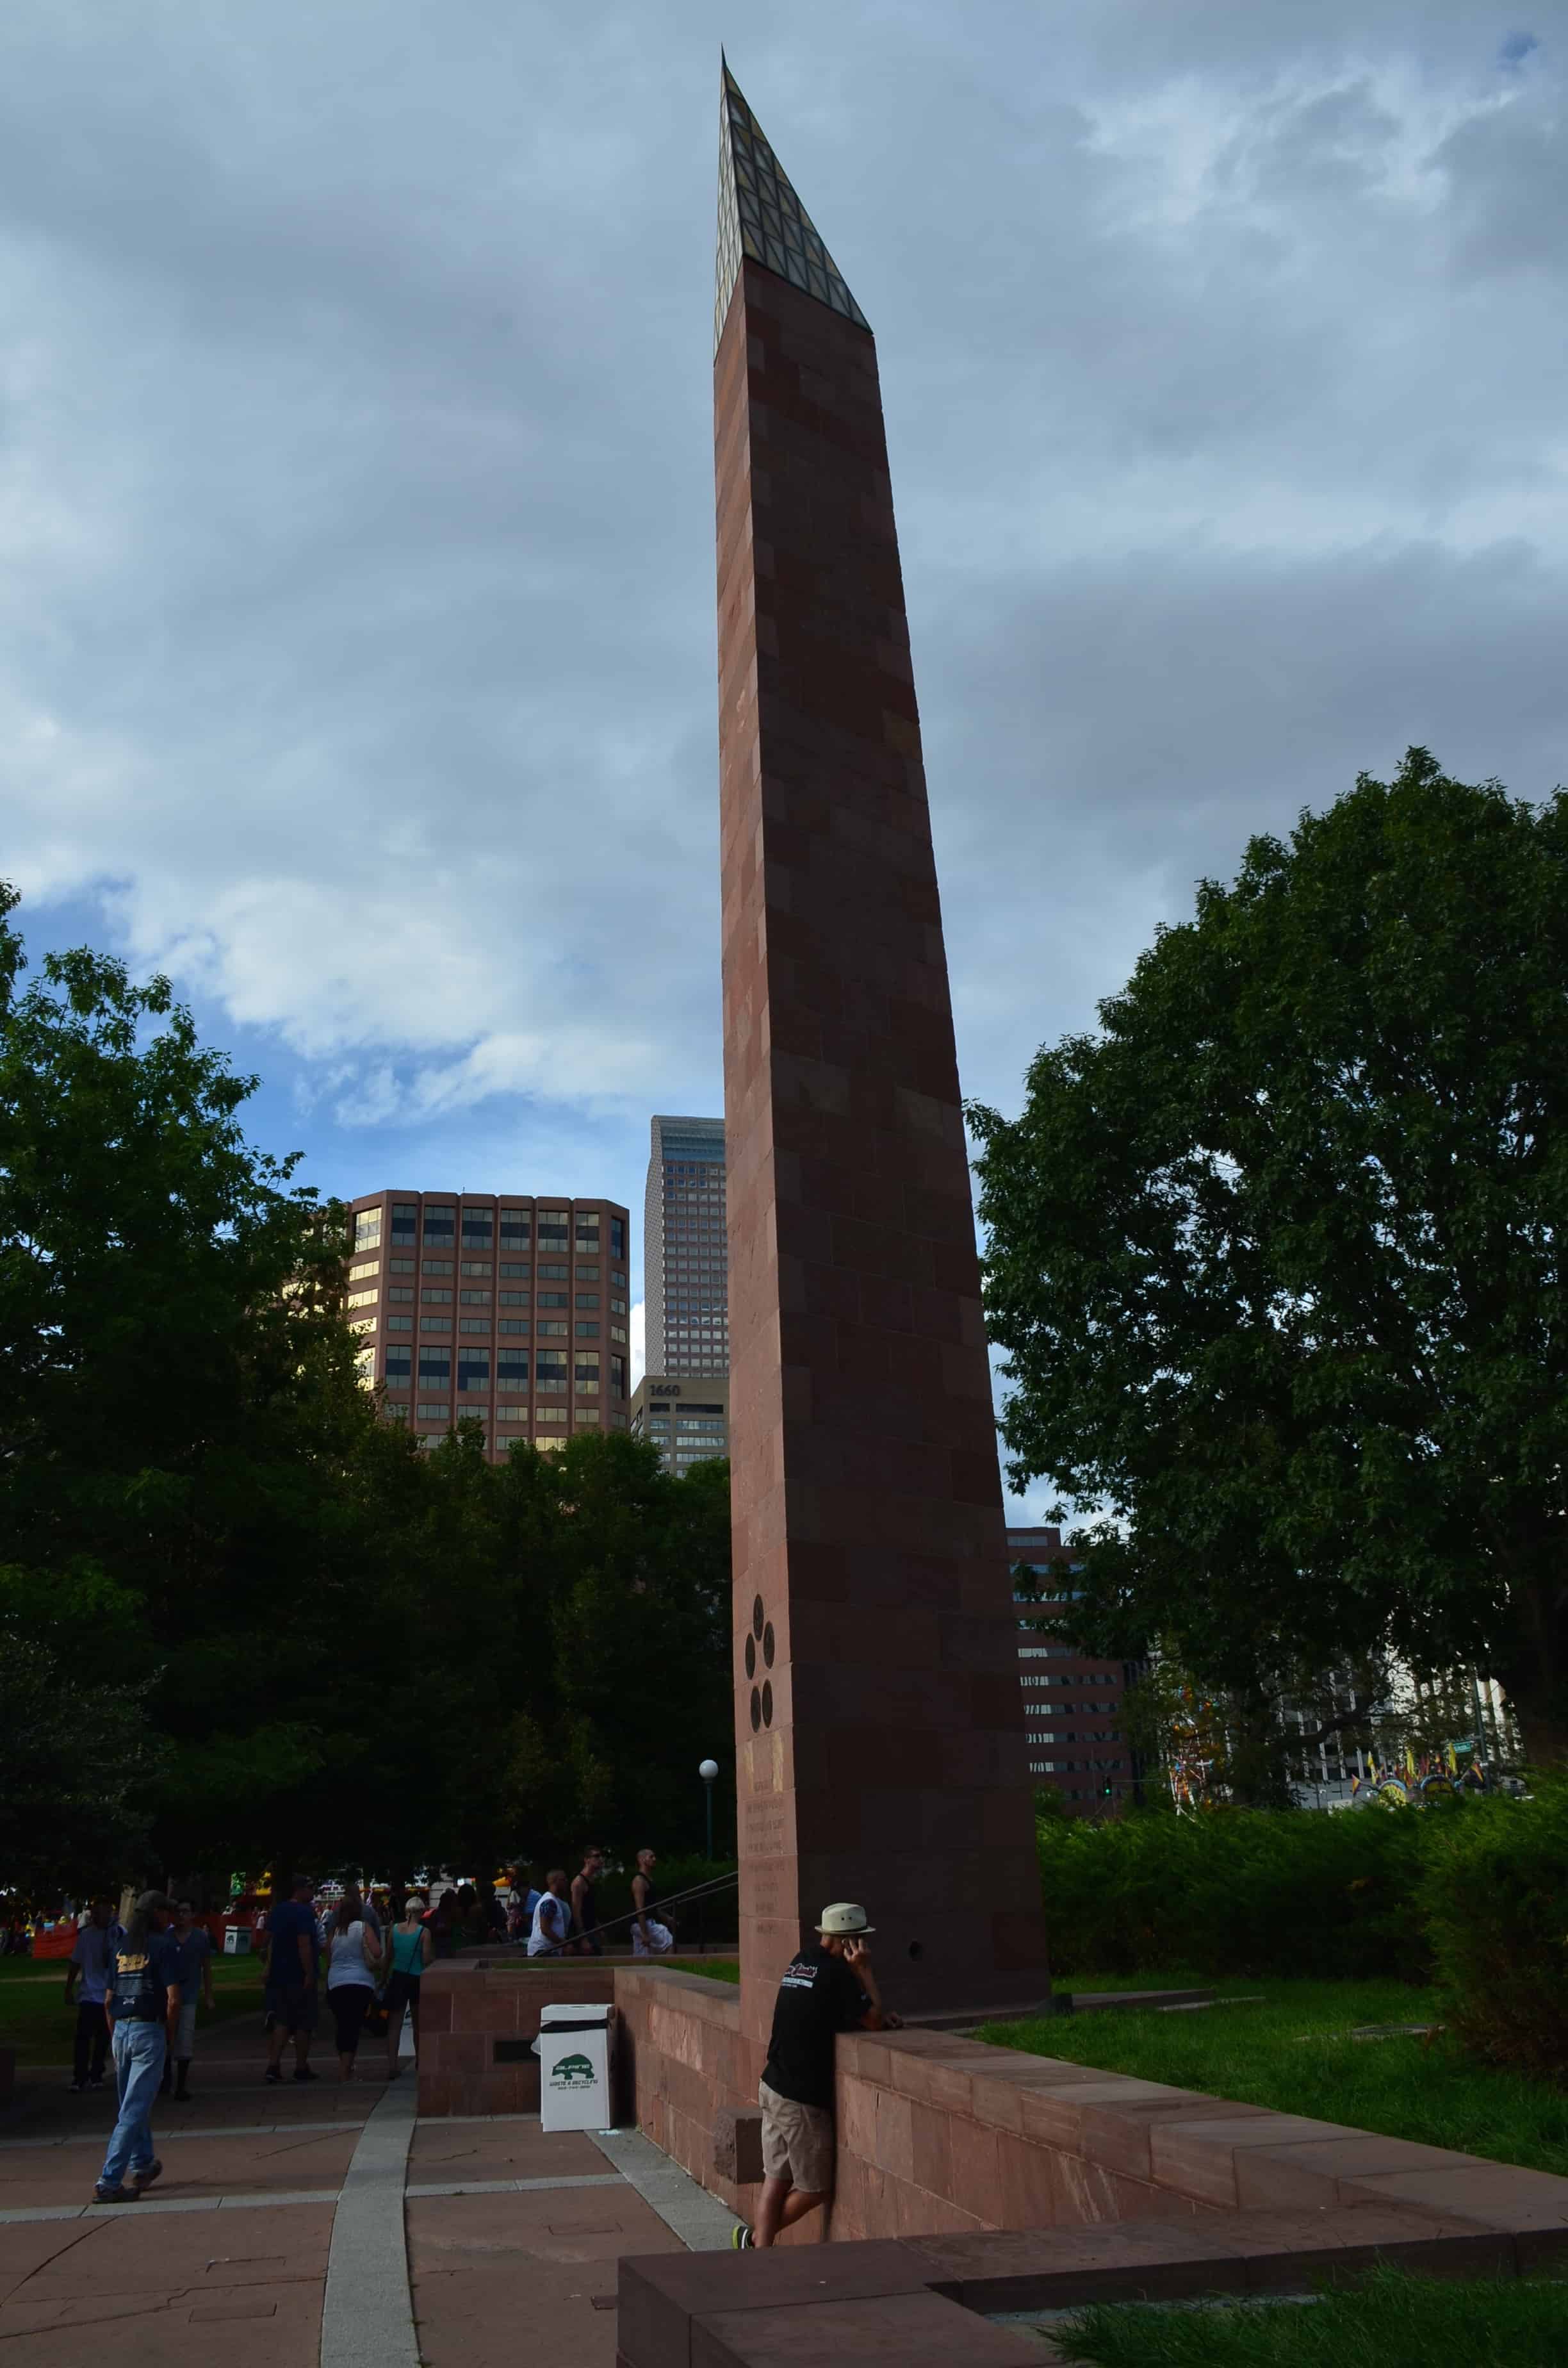 War Memorial at Civic Center Park in Denver, Colorado